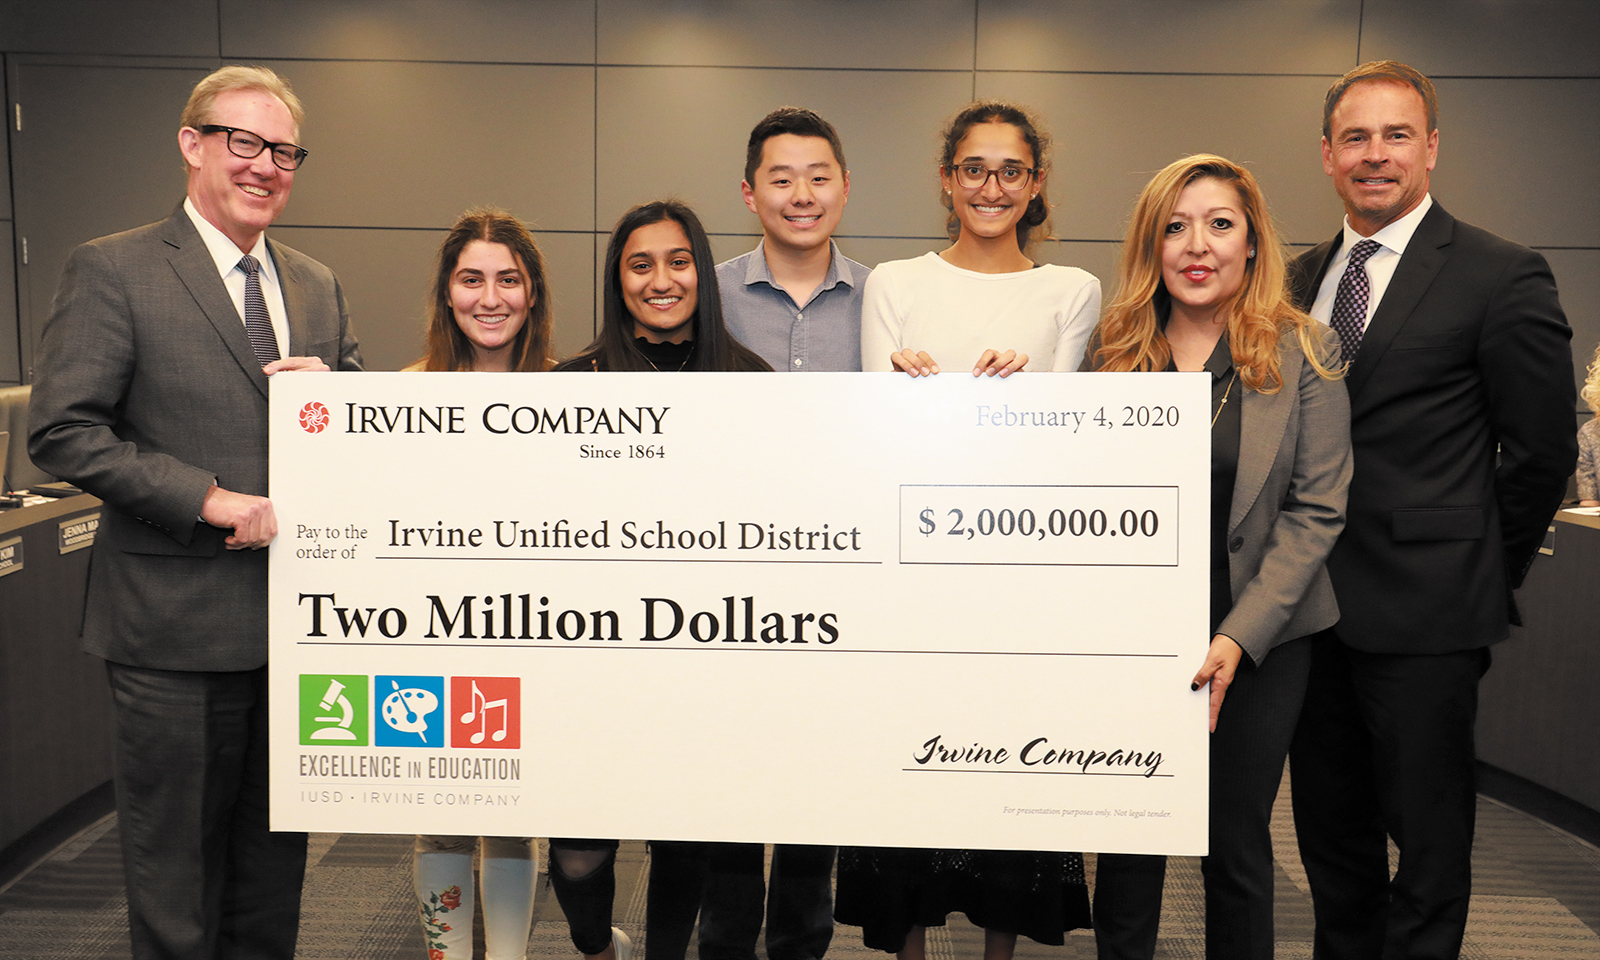 Irvine Co. donates $2 million to IUSD